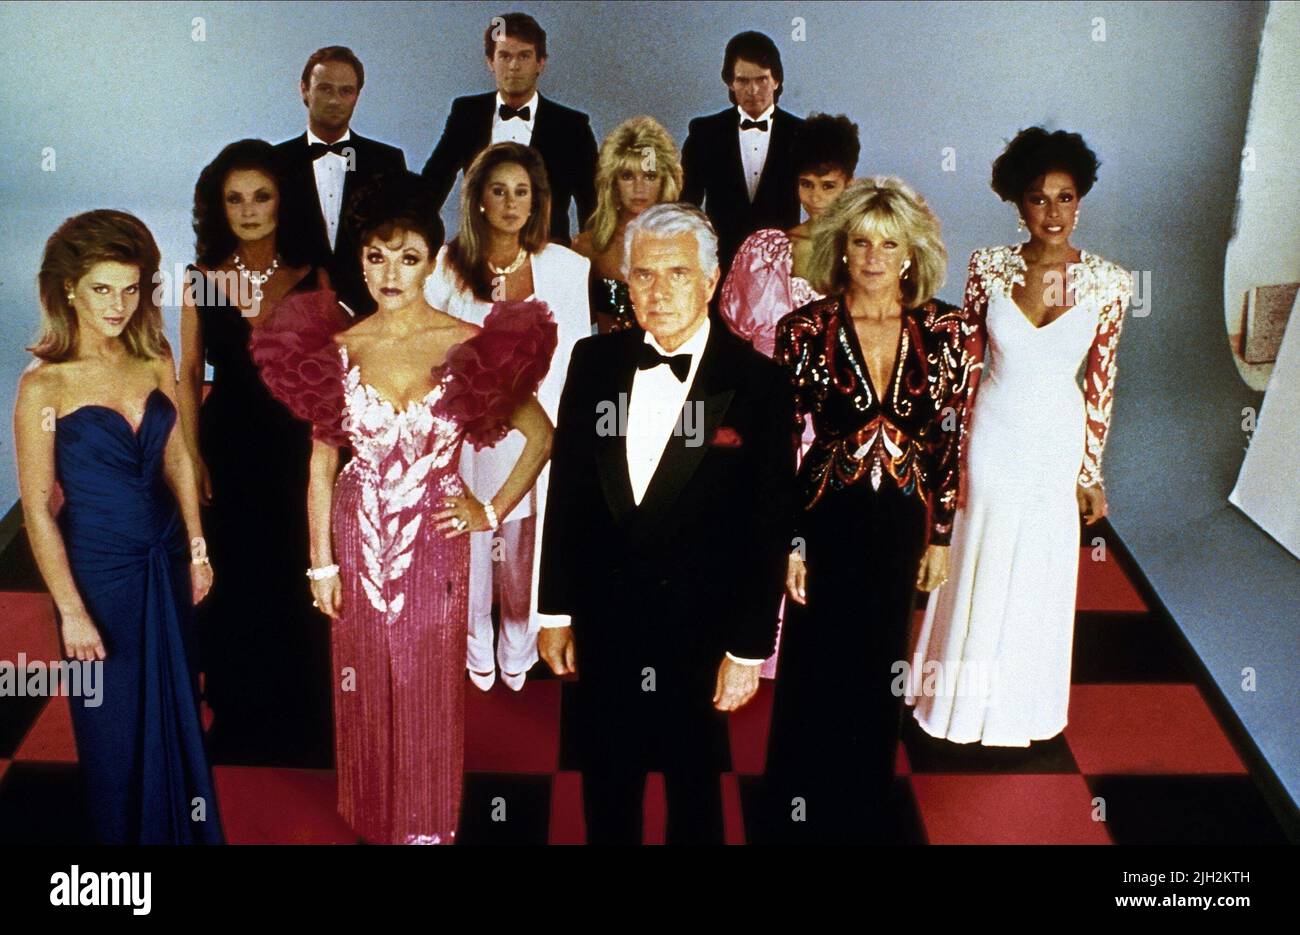 OXENBERG,COLLINS,FORSYTHE,EVANS,CARROLL,BEACHAM,BELLWOOD,LOCKLEAR,CAZENOVE,THOMSON, DYNASTY, 1981 Stock Photo